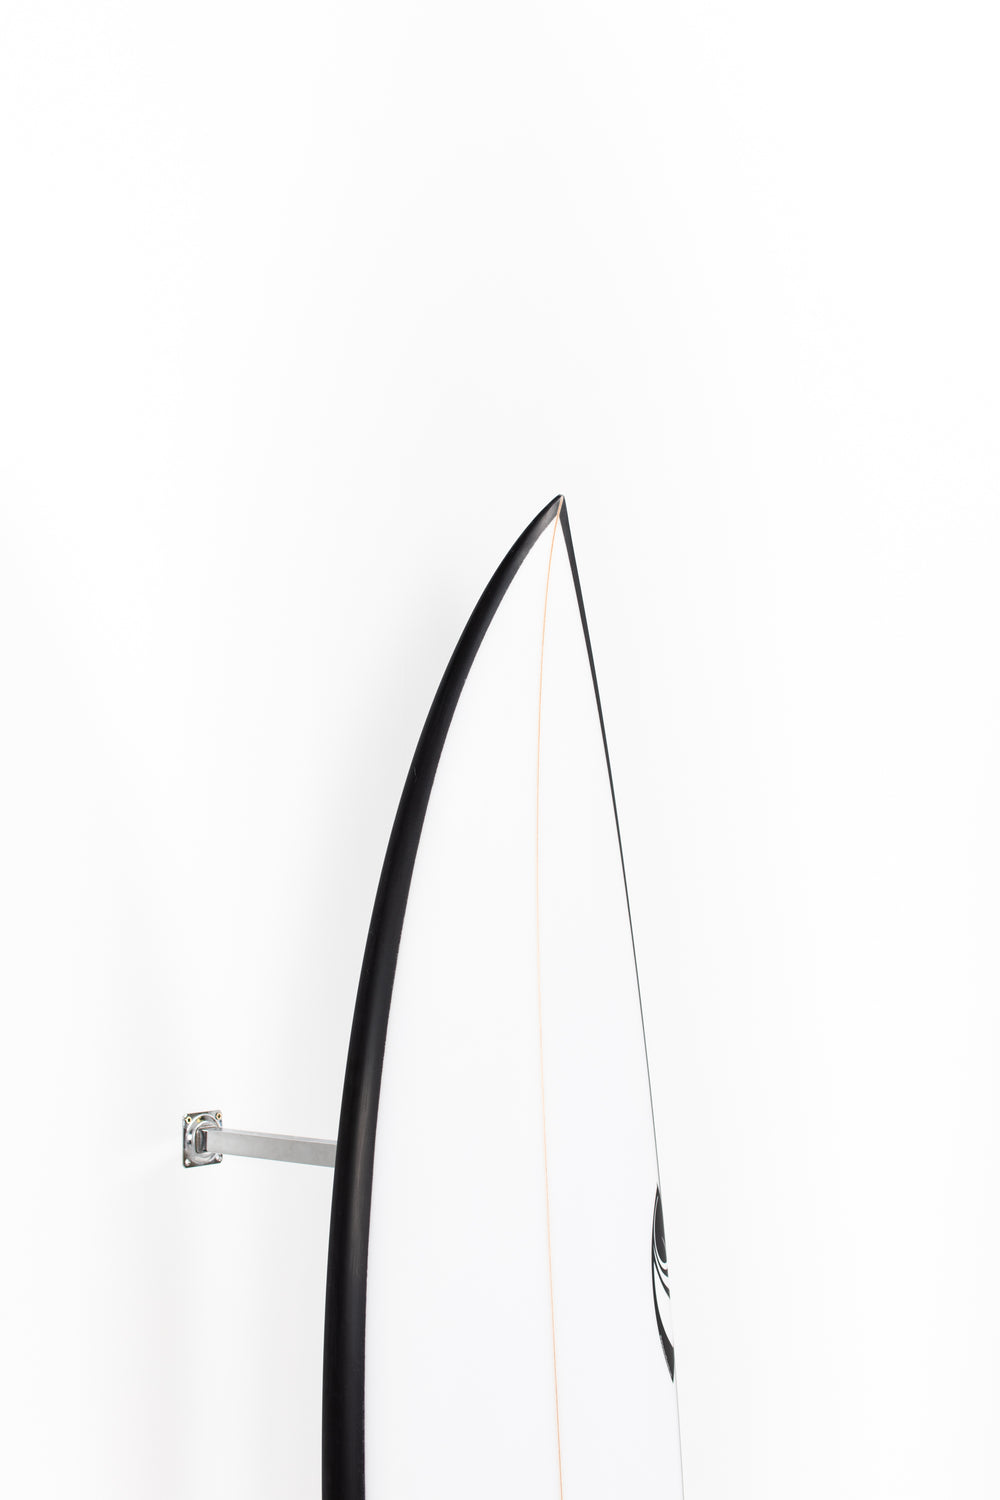 Sharp Eye Surfboards - INFERNO 72 by Marcio Zouvi 6'4